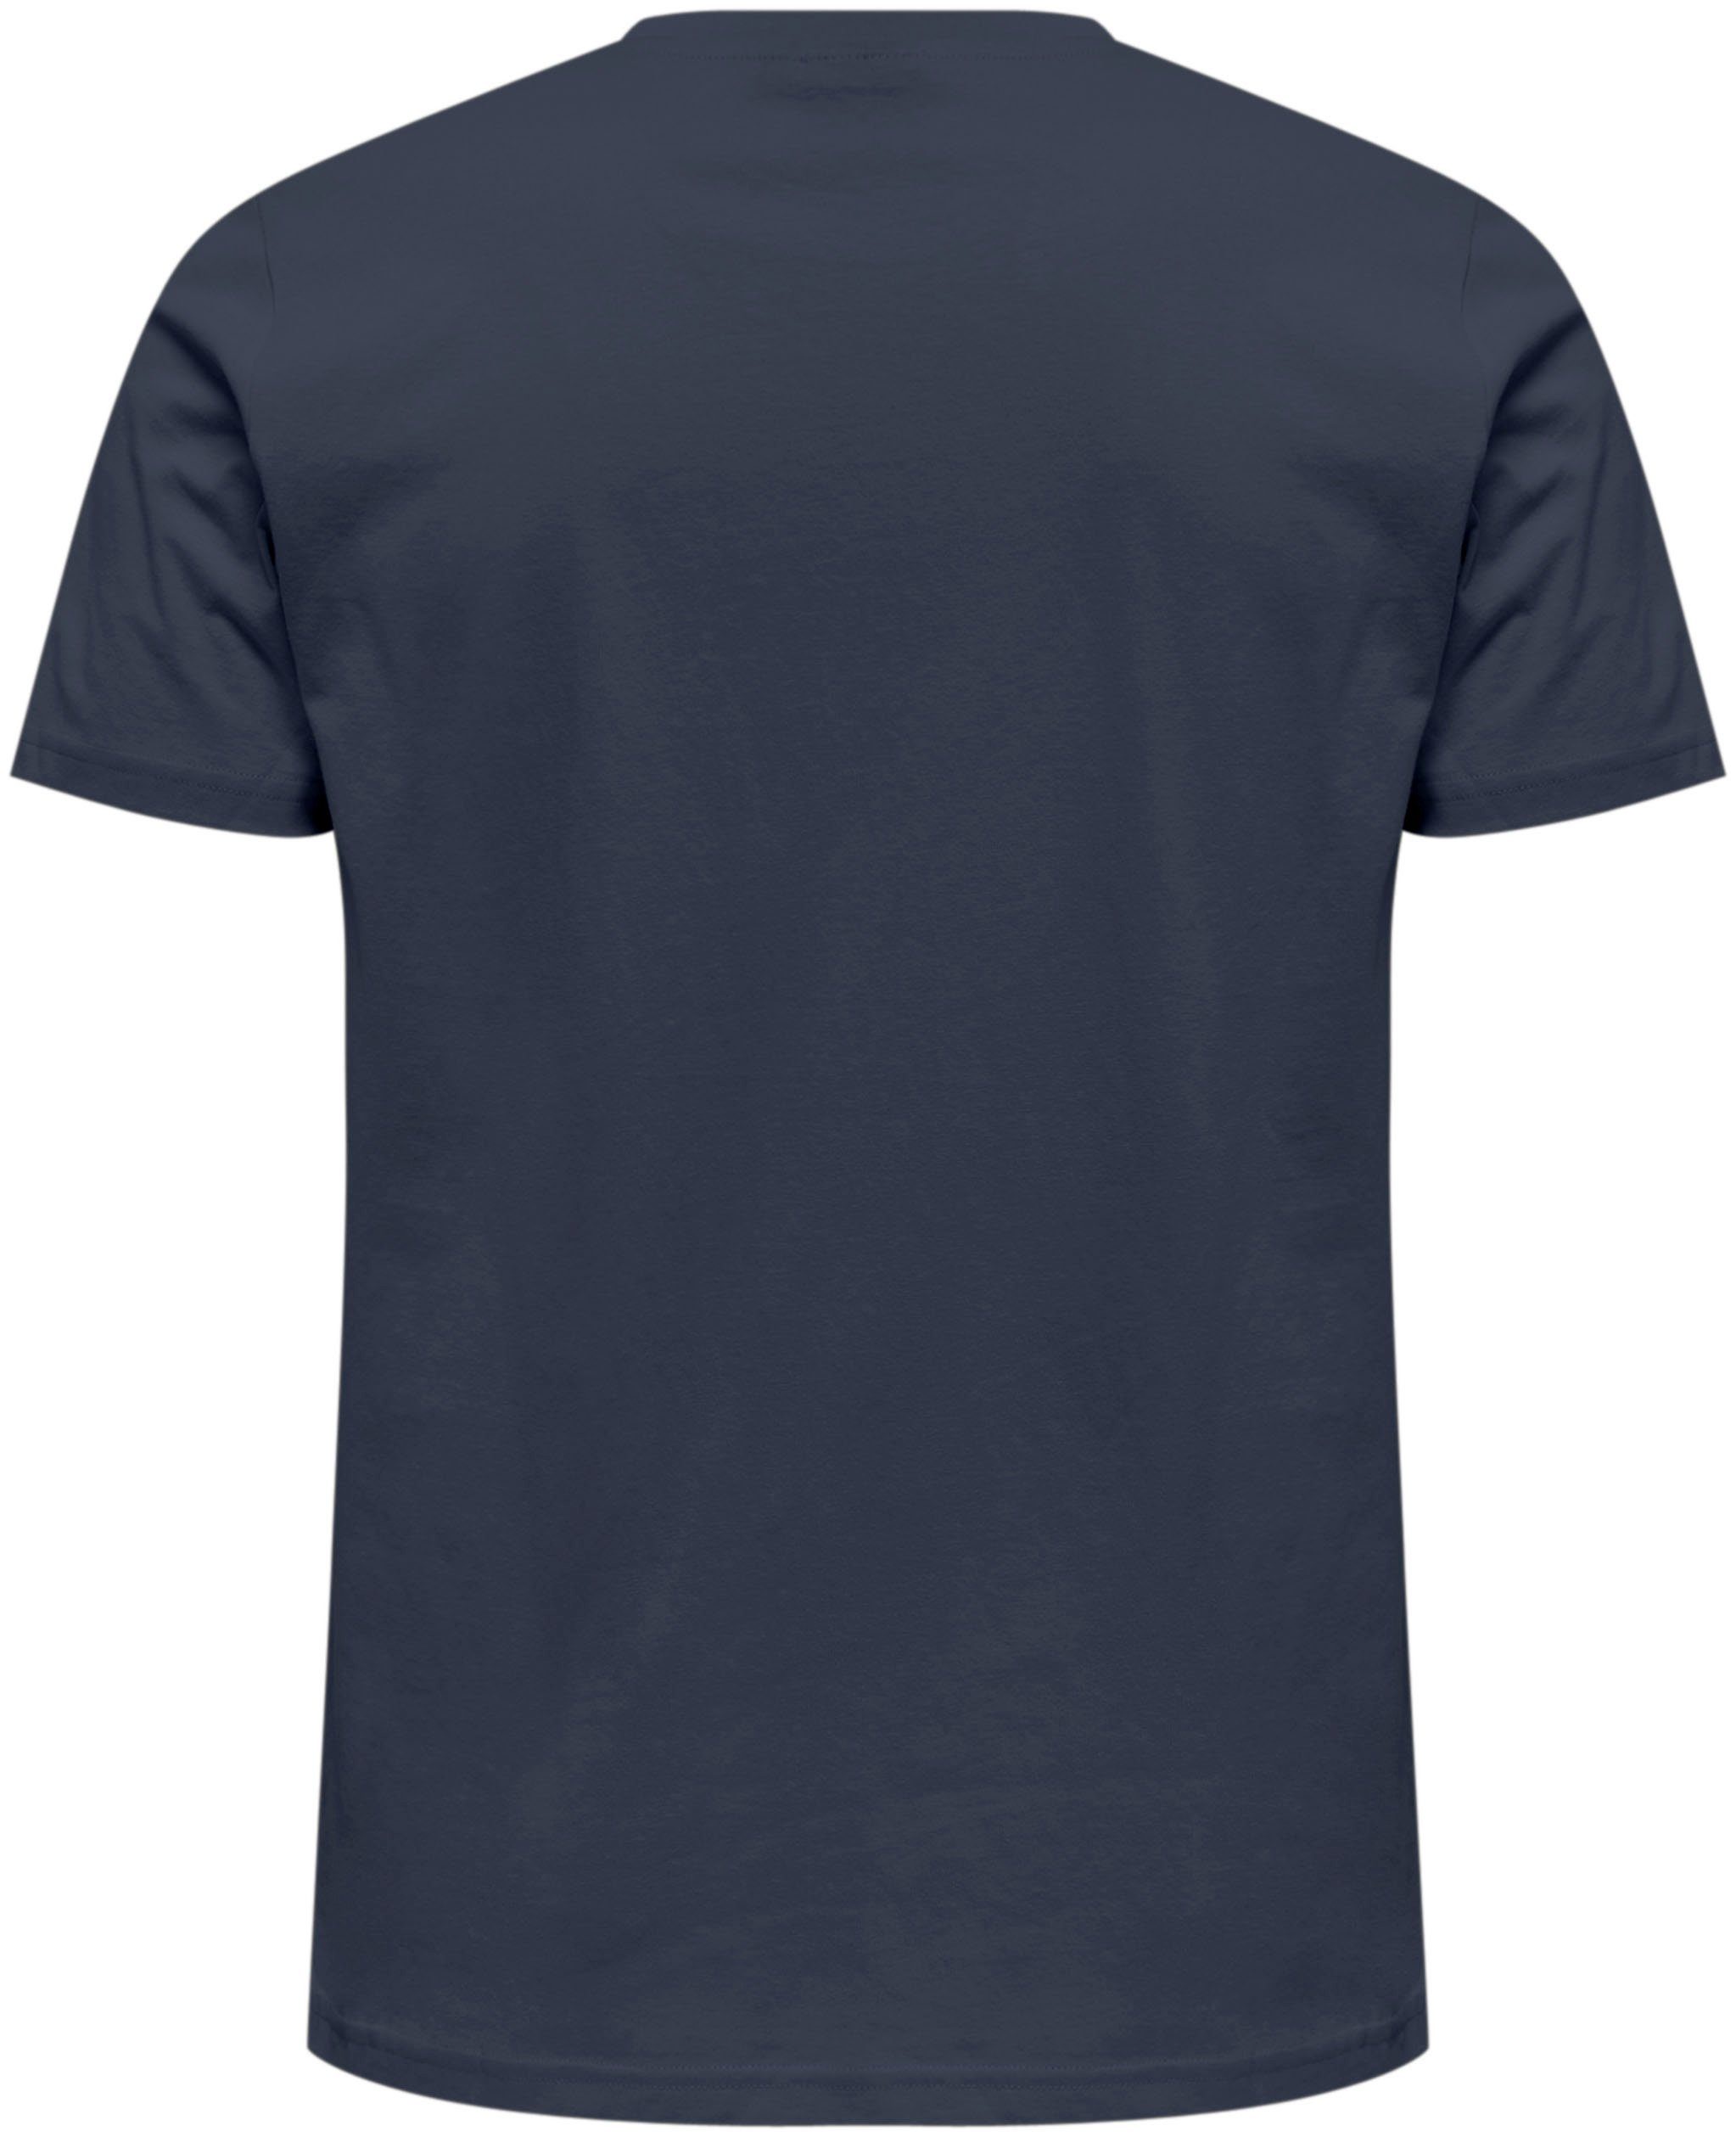 mit Logo hummel Print T-Shirt marine